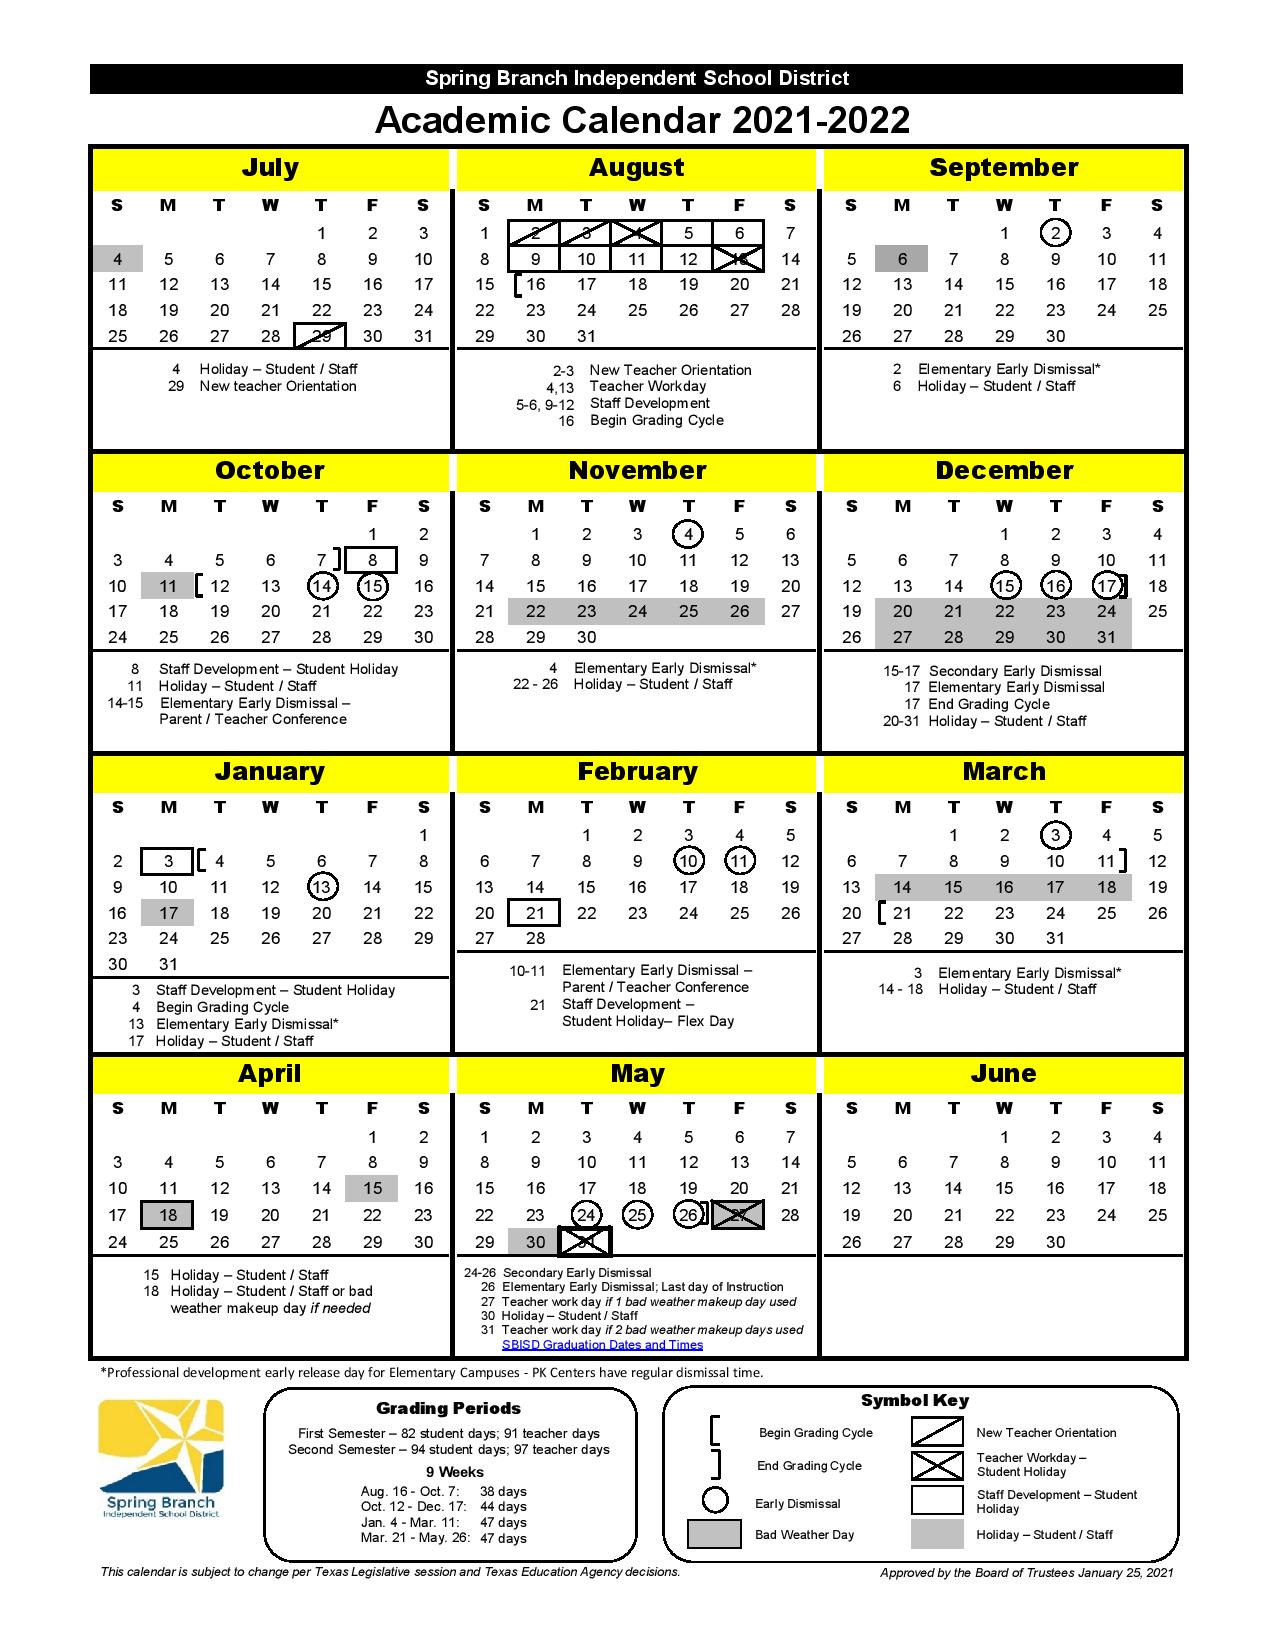 Spring Branch Isd Calendar 2022 Spring Branch Independent School District Calendar 2021-2022